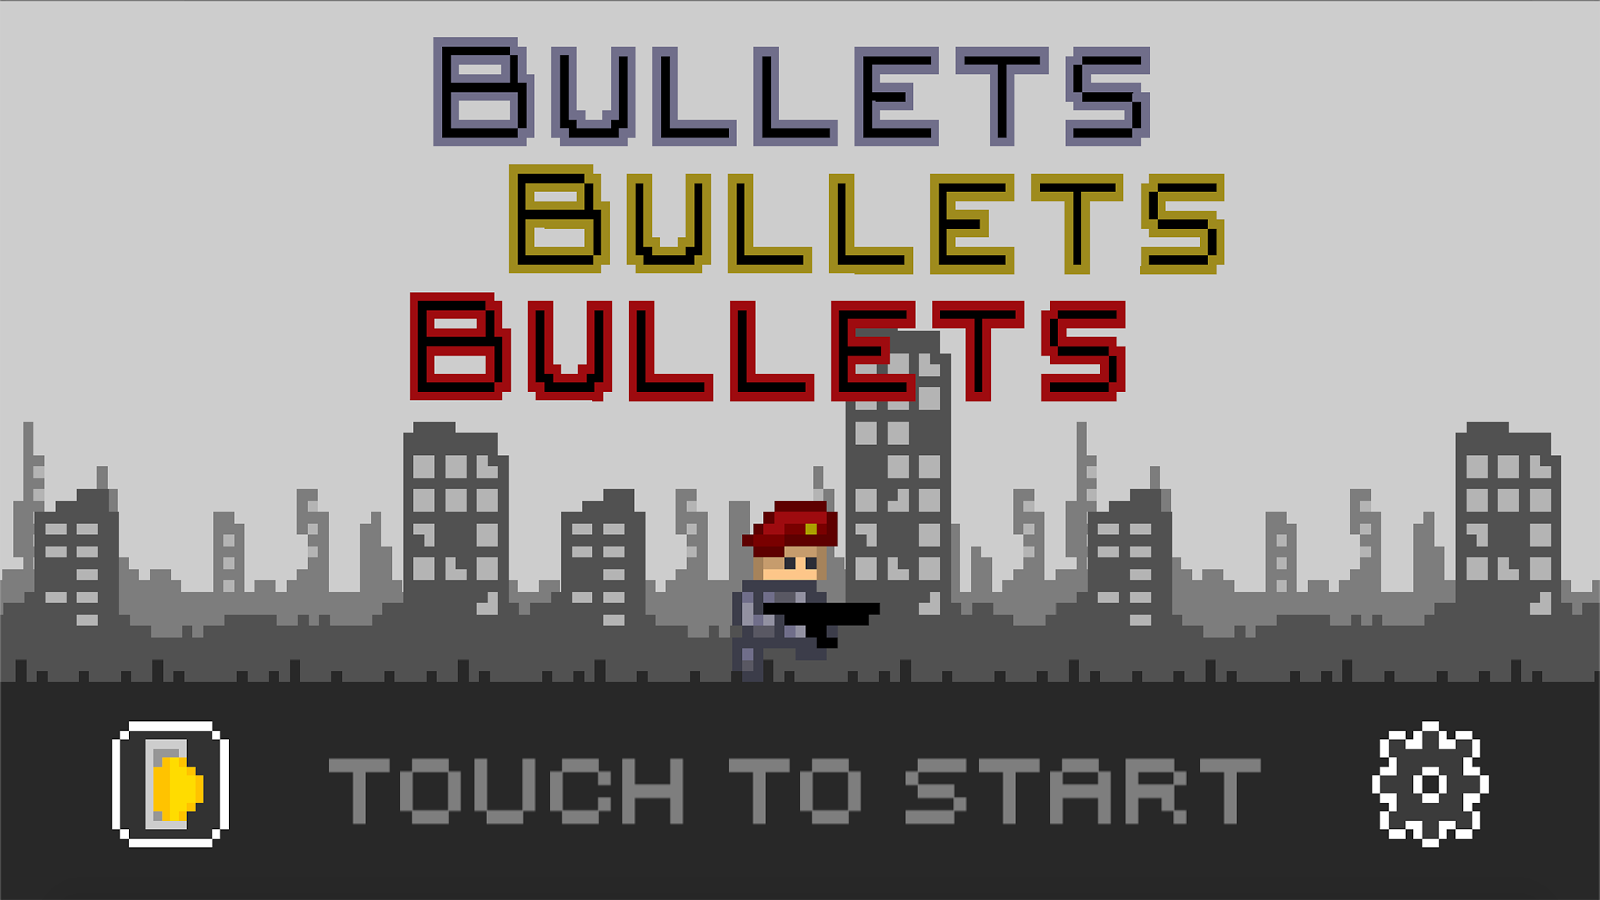 Bullets Bullets Bullets